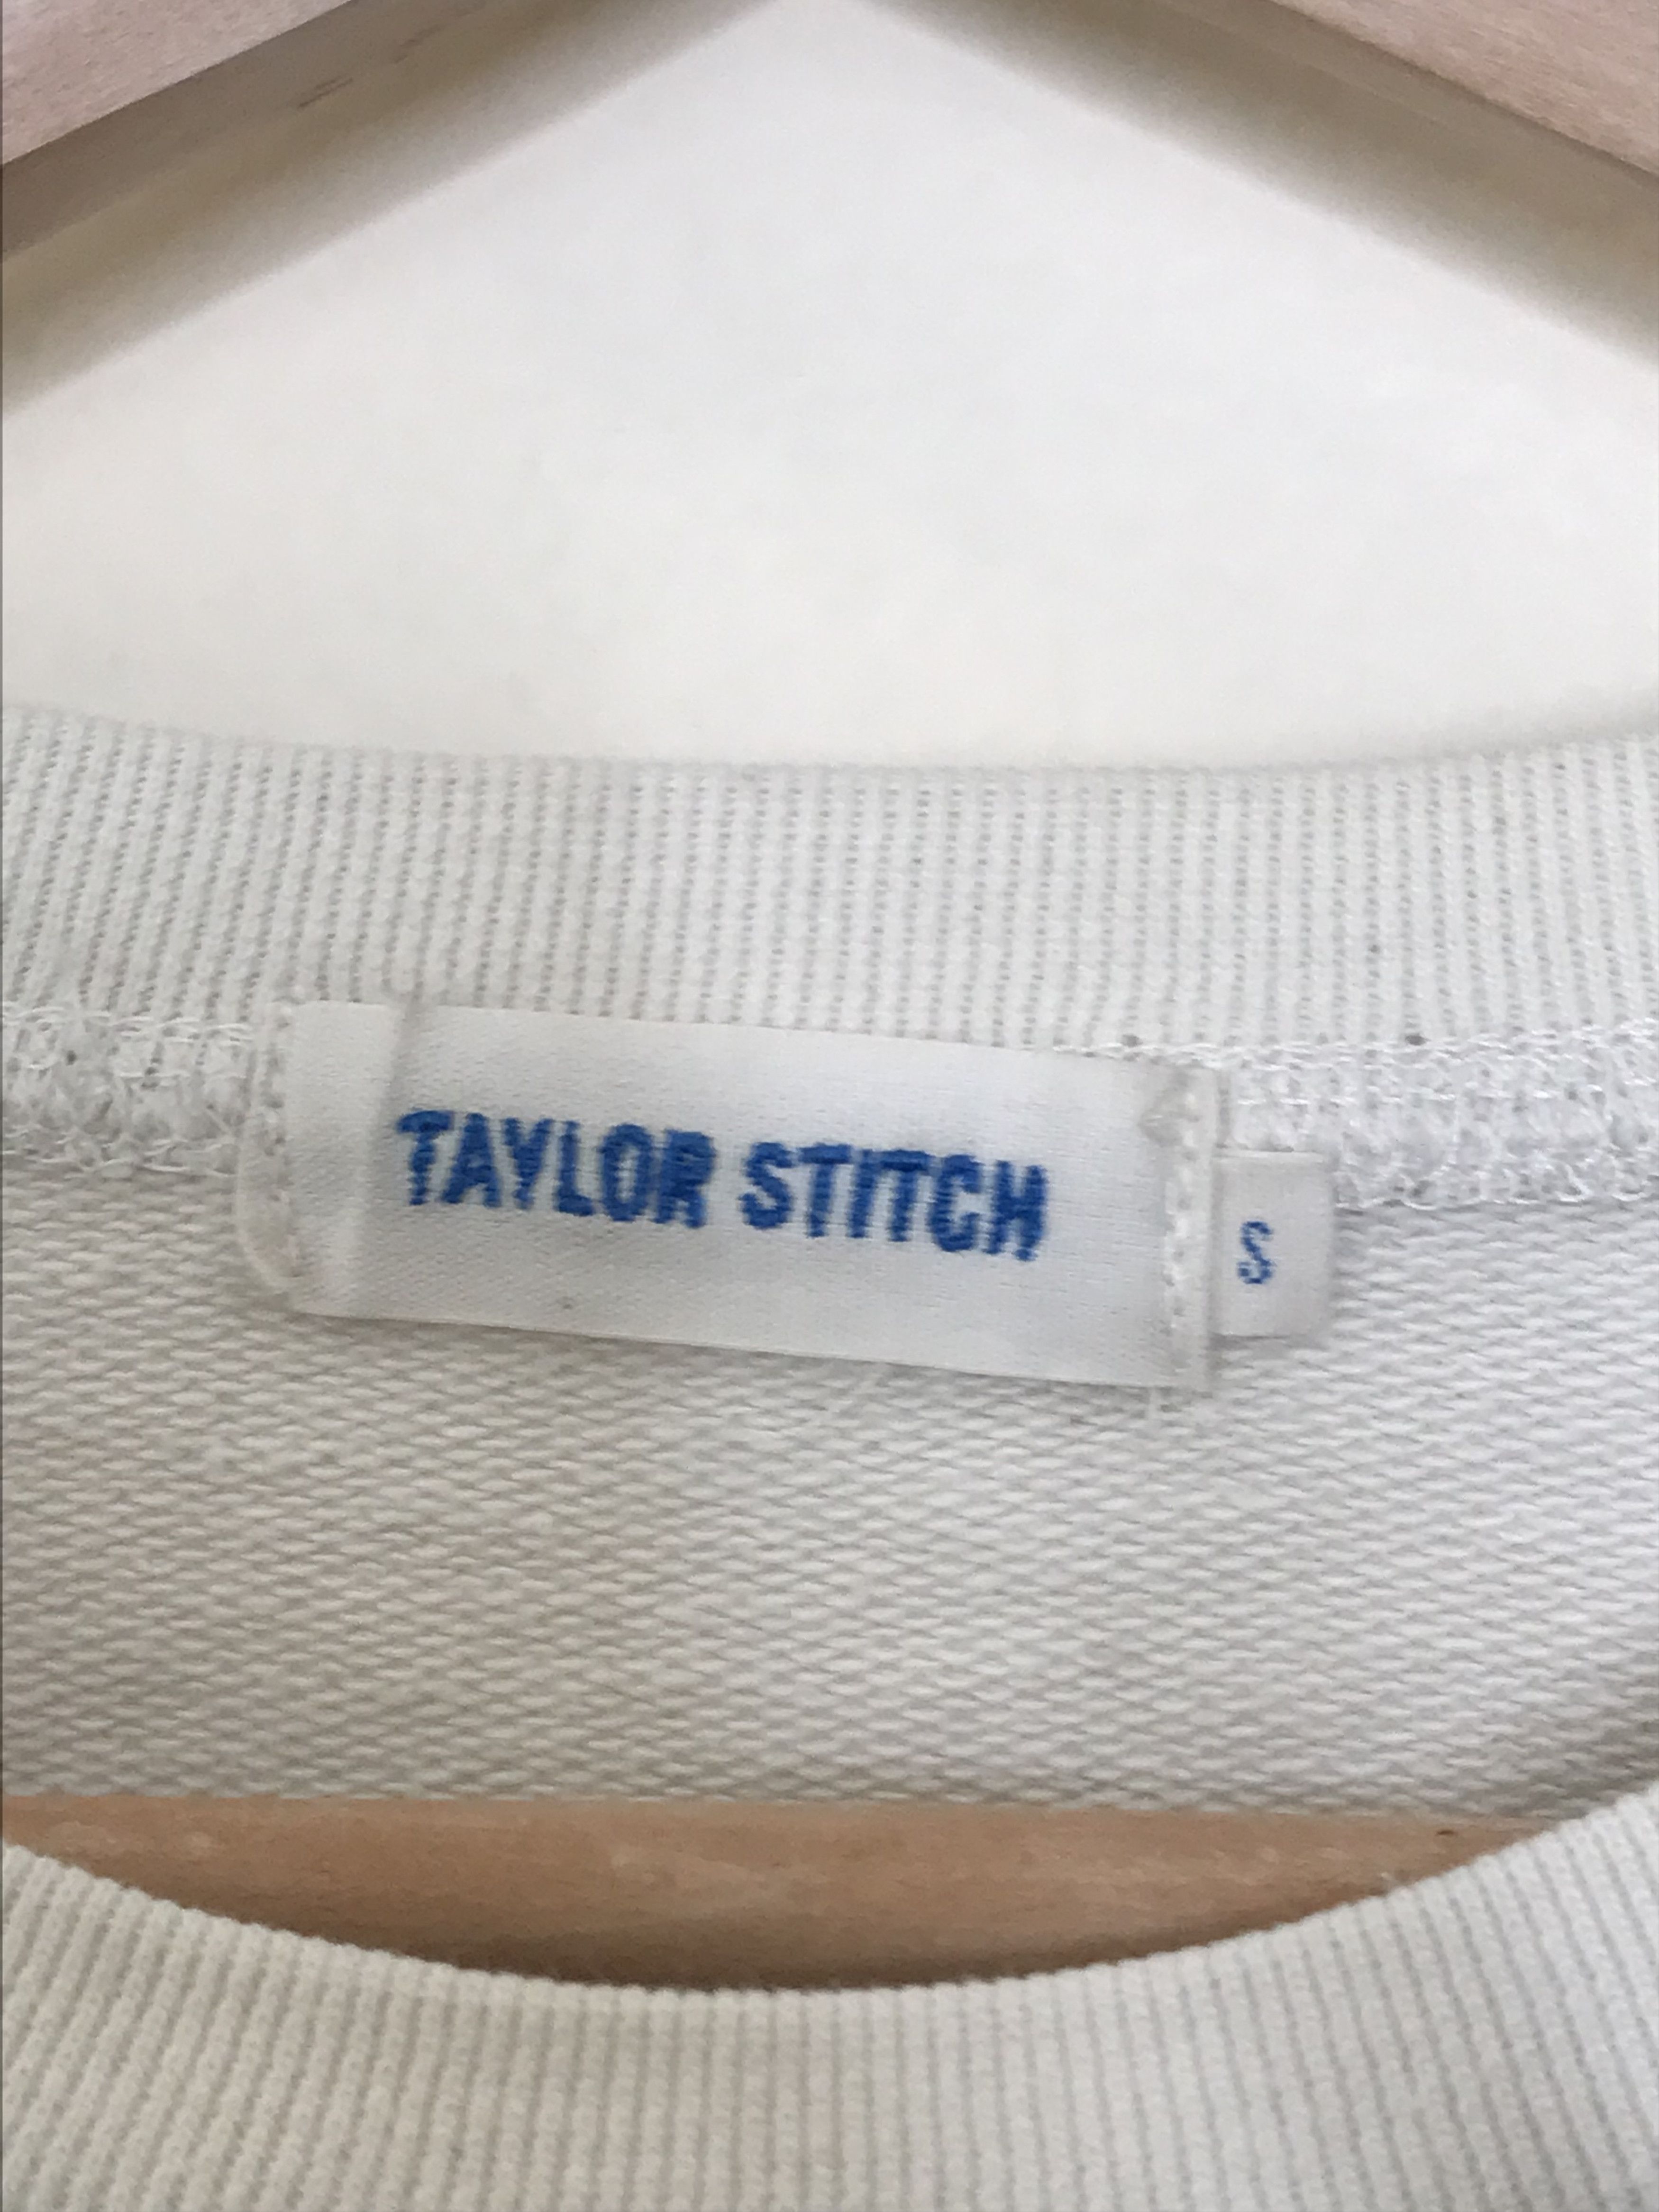 Taylor Stitch Taylor Stitch Sweatshirt Size US S / EU 44-46 / 1 - 3 Preview